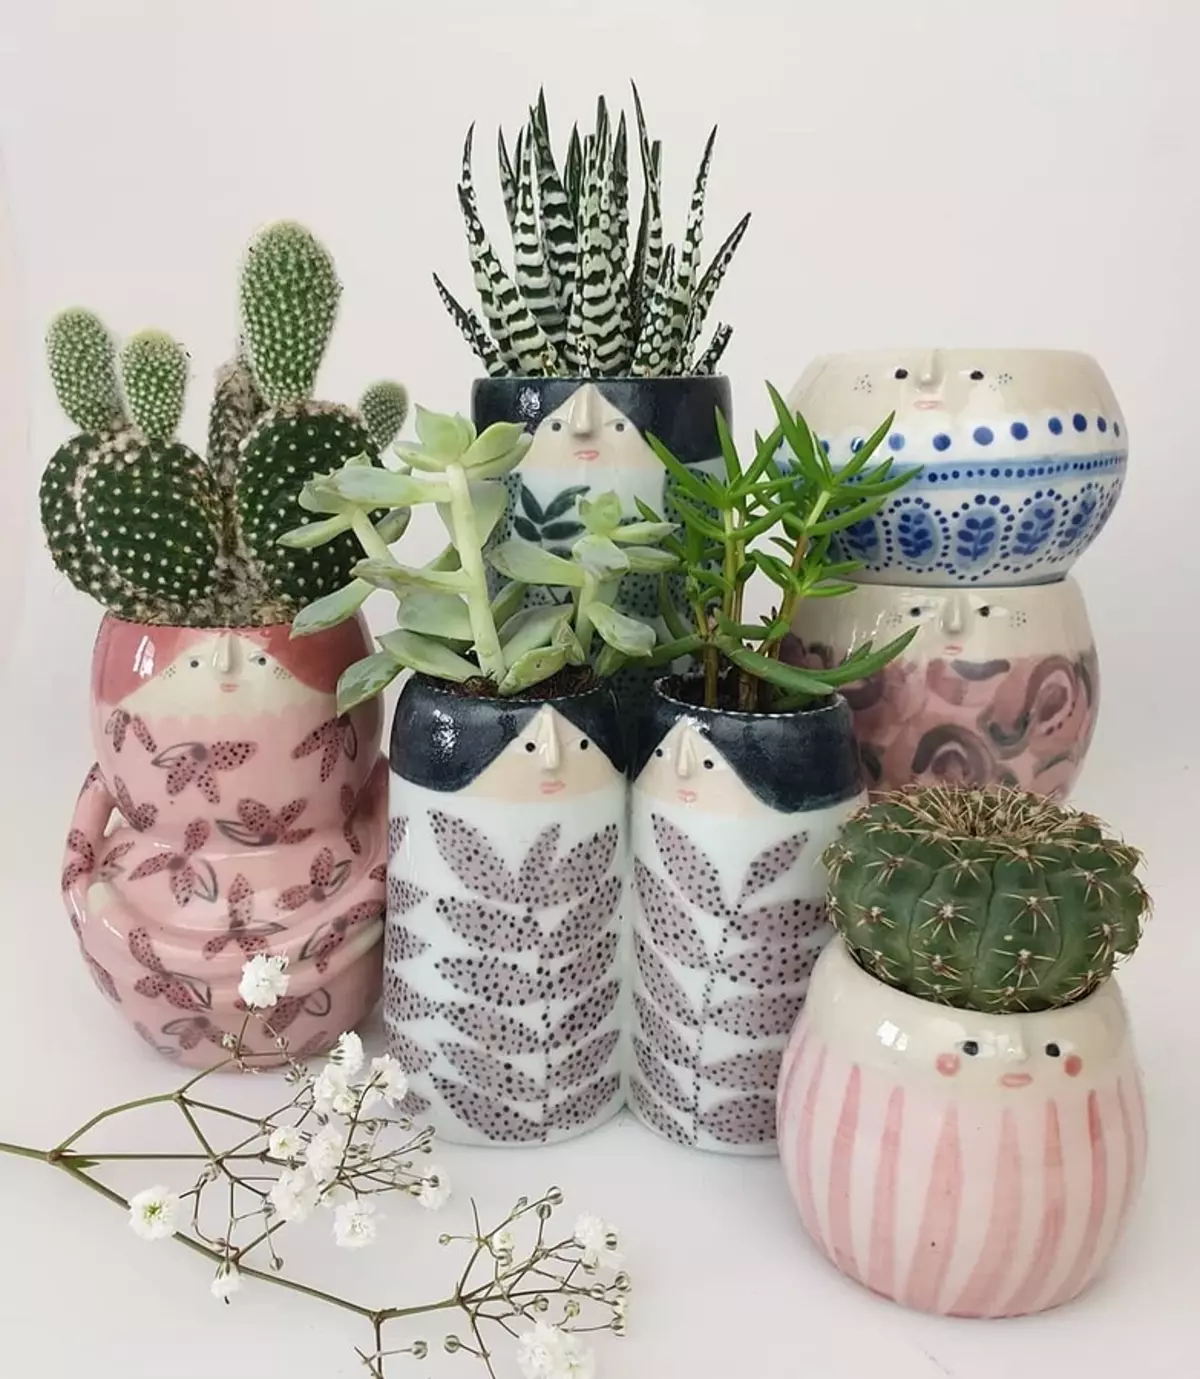 Ceramics with character: needlework instagram week